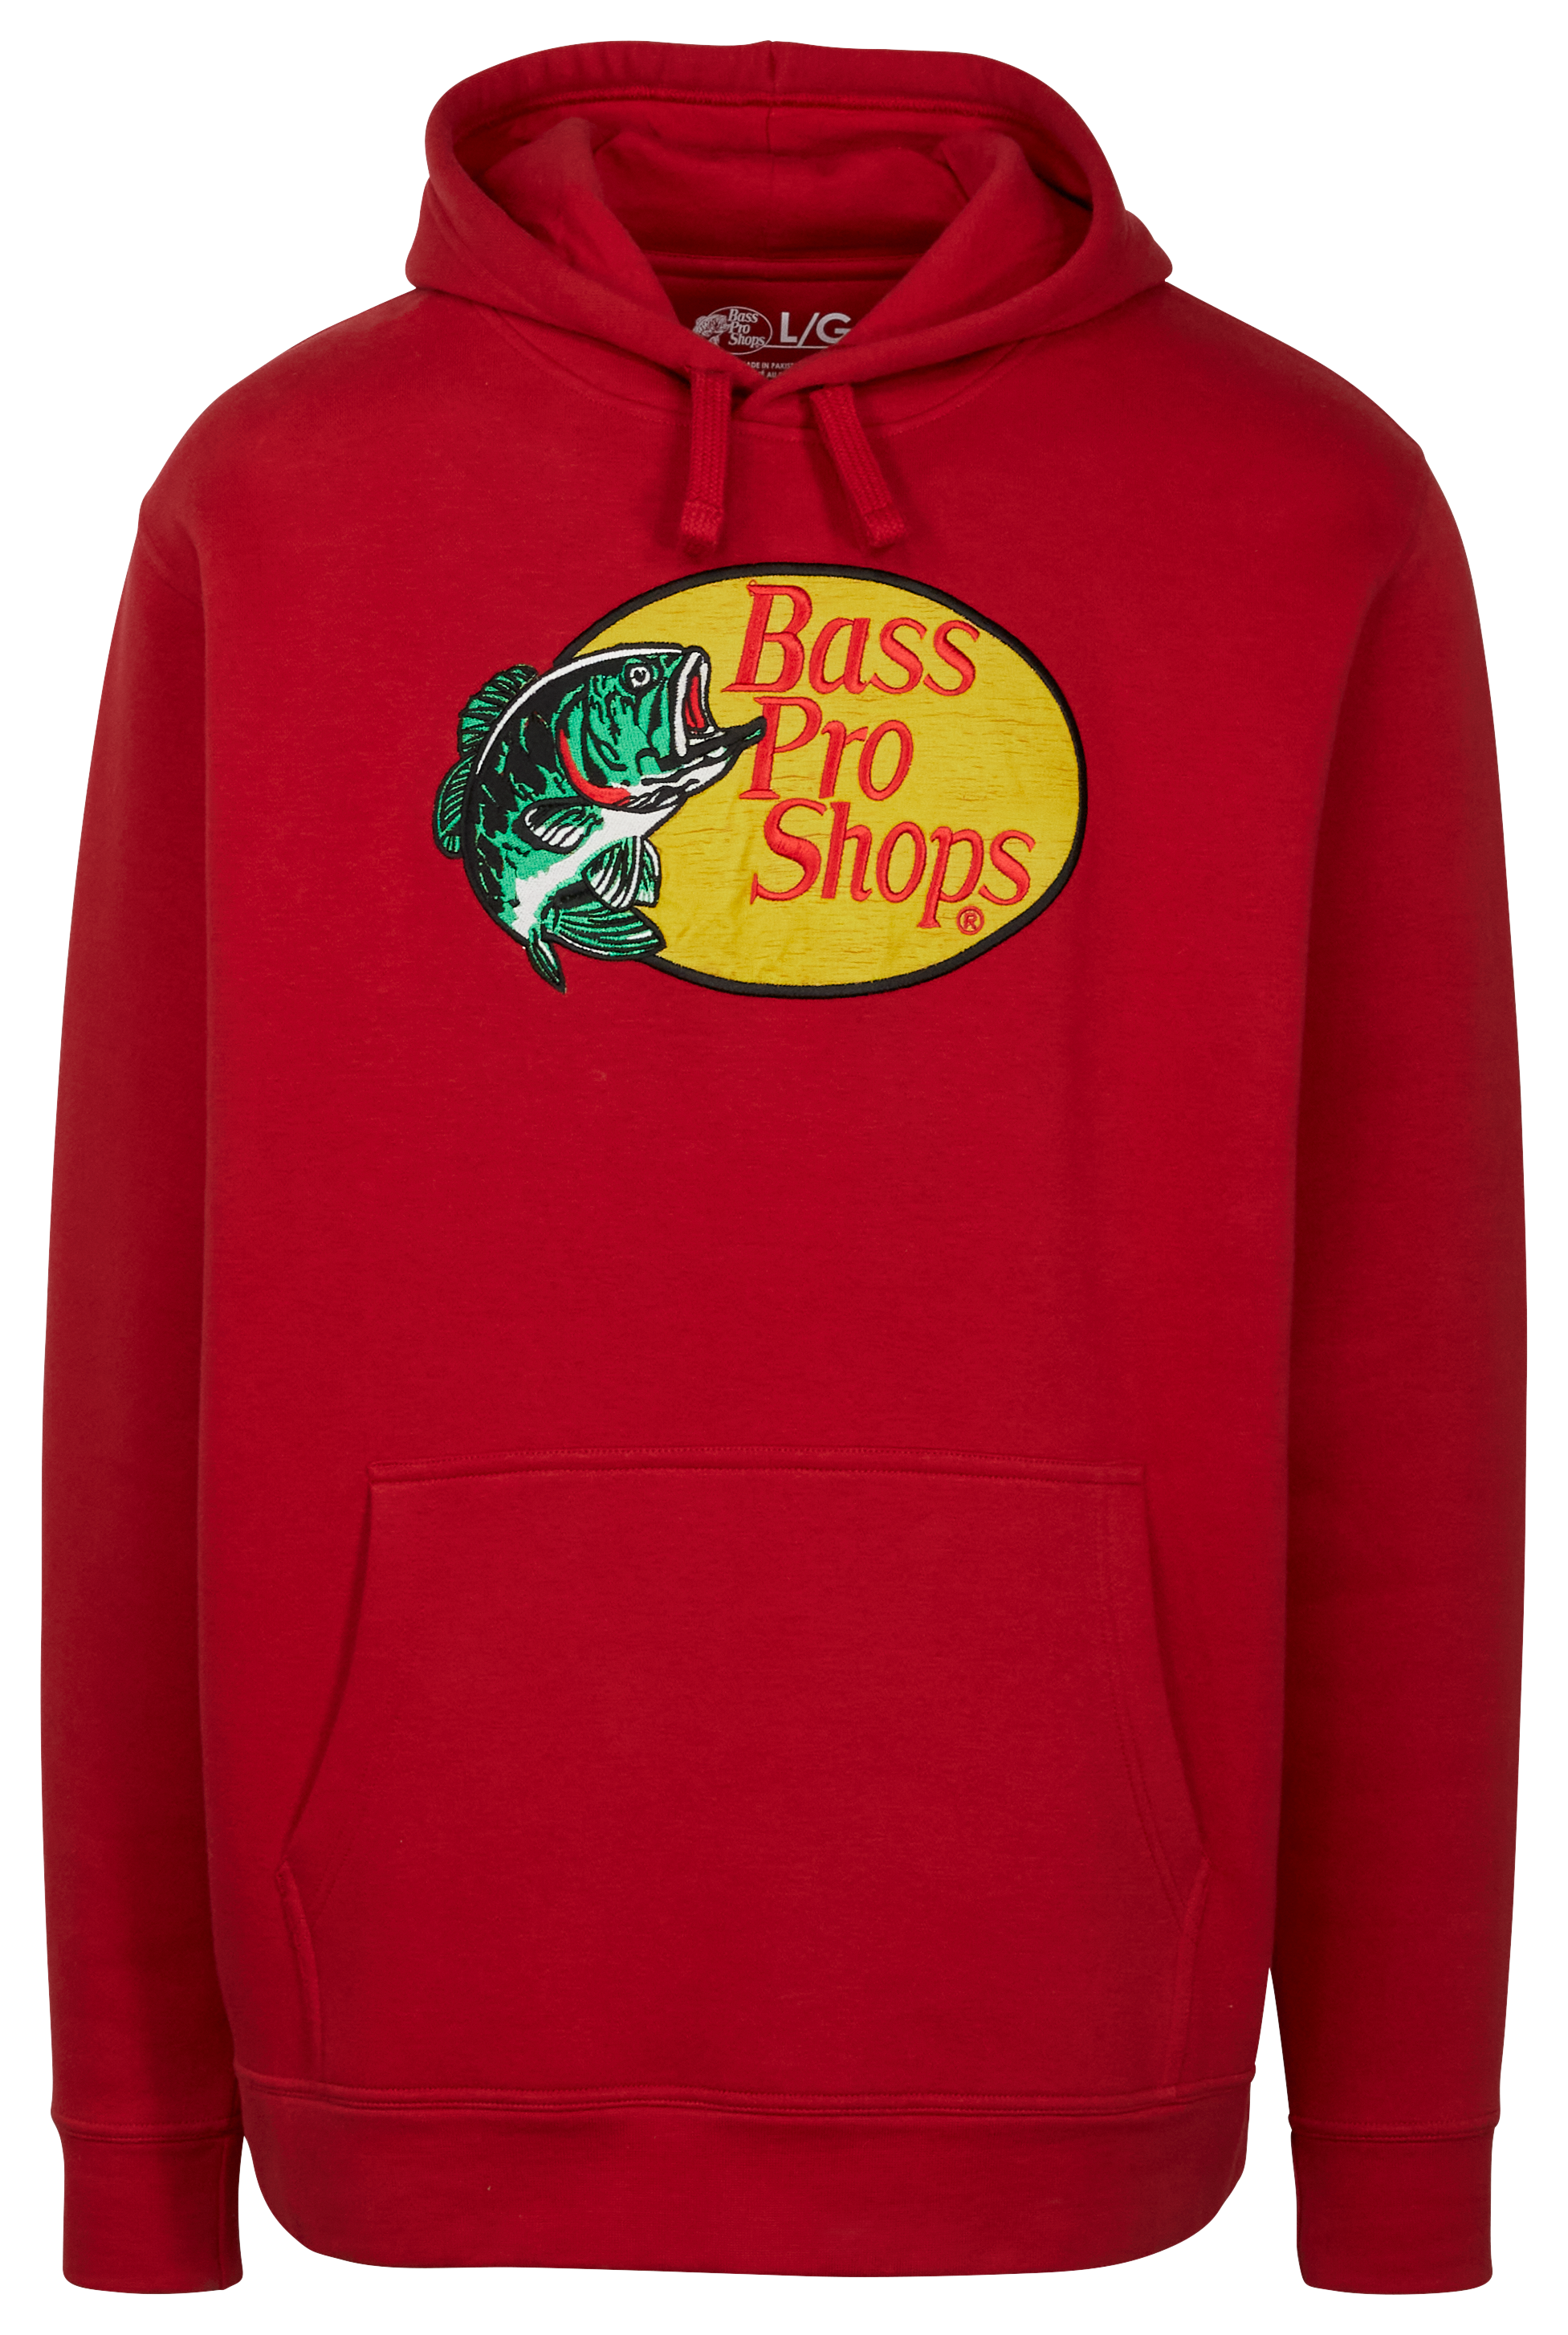 Bass Pro Shops Embroidered Woodcut Logo Hoodie for Men - Scarlet Sage - XLT